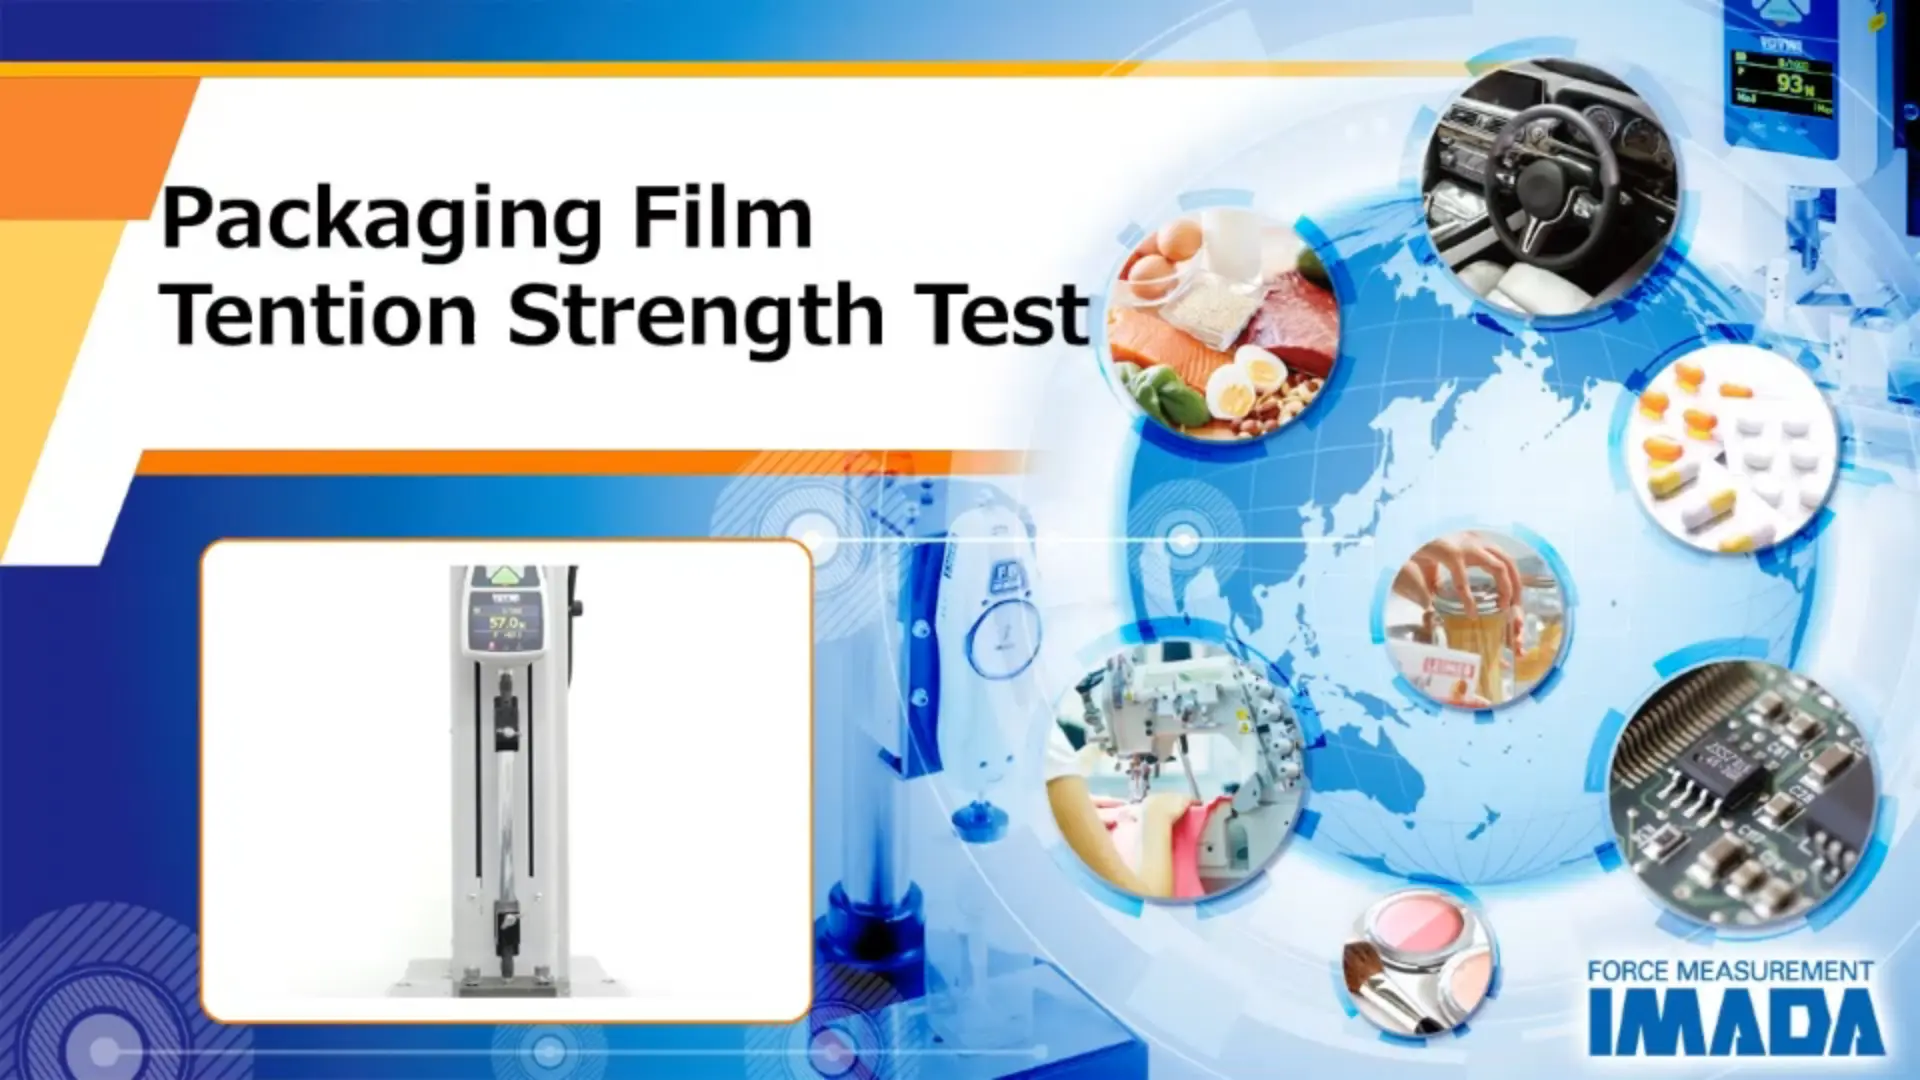 Packaging film tension strength test